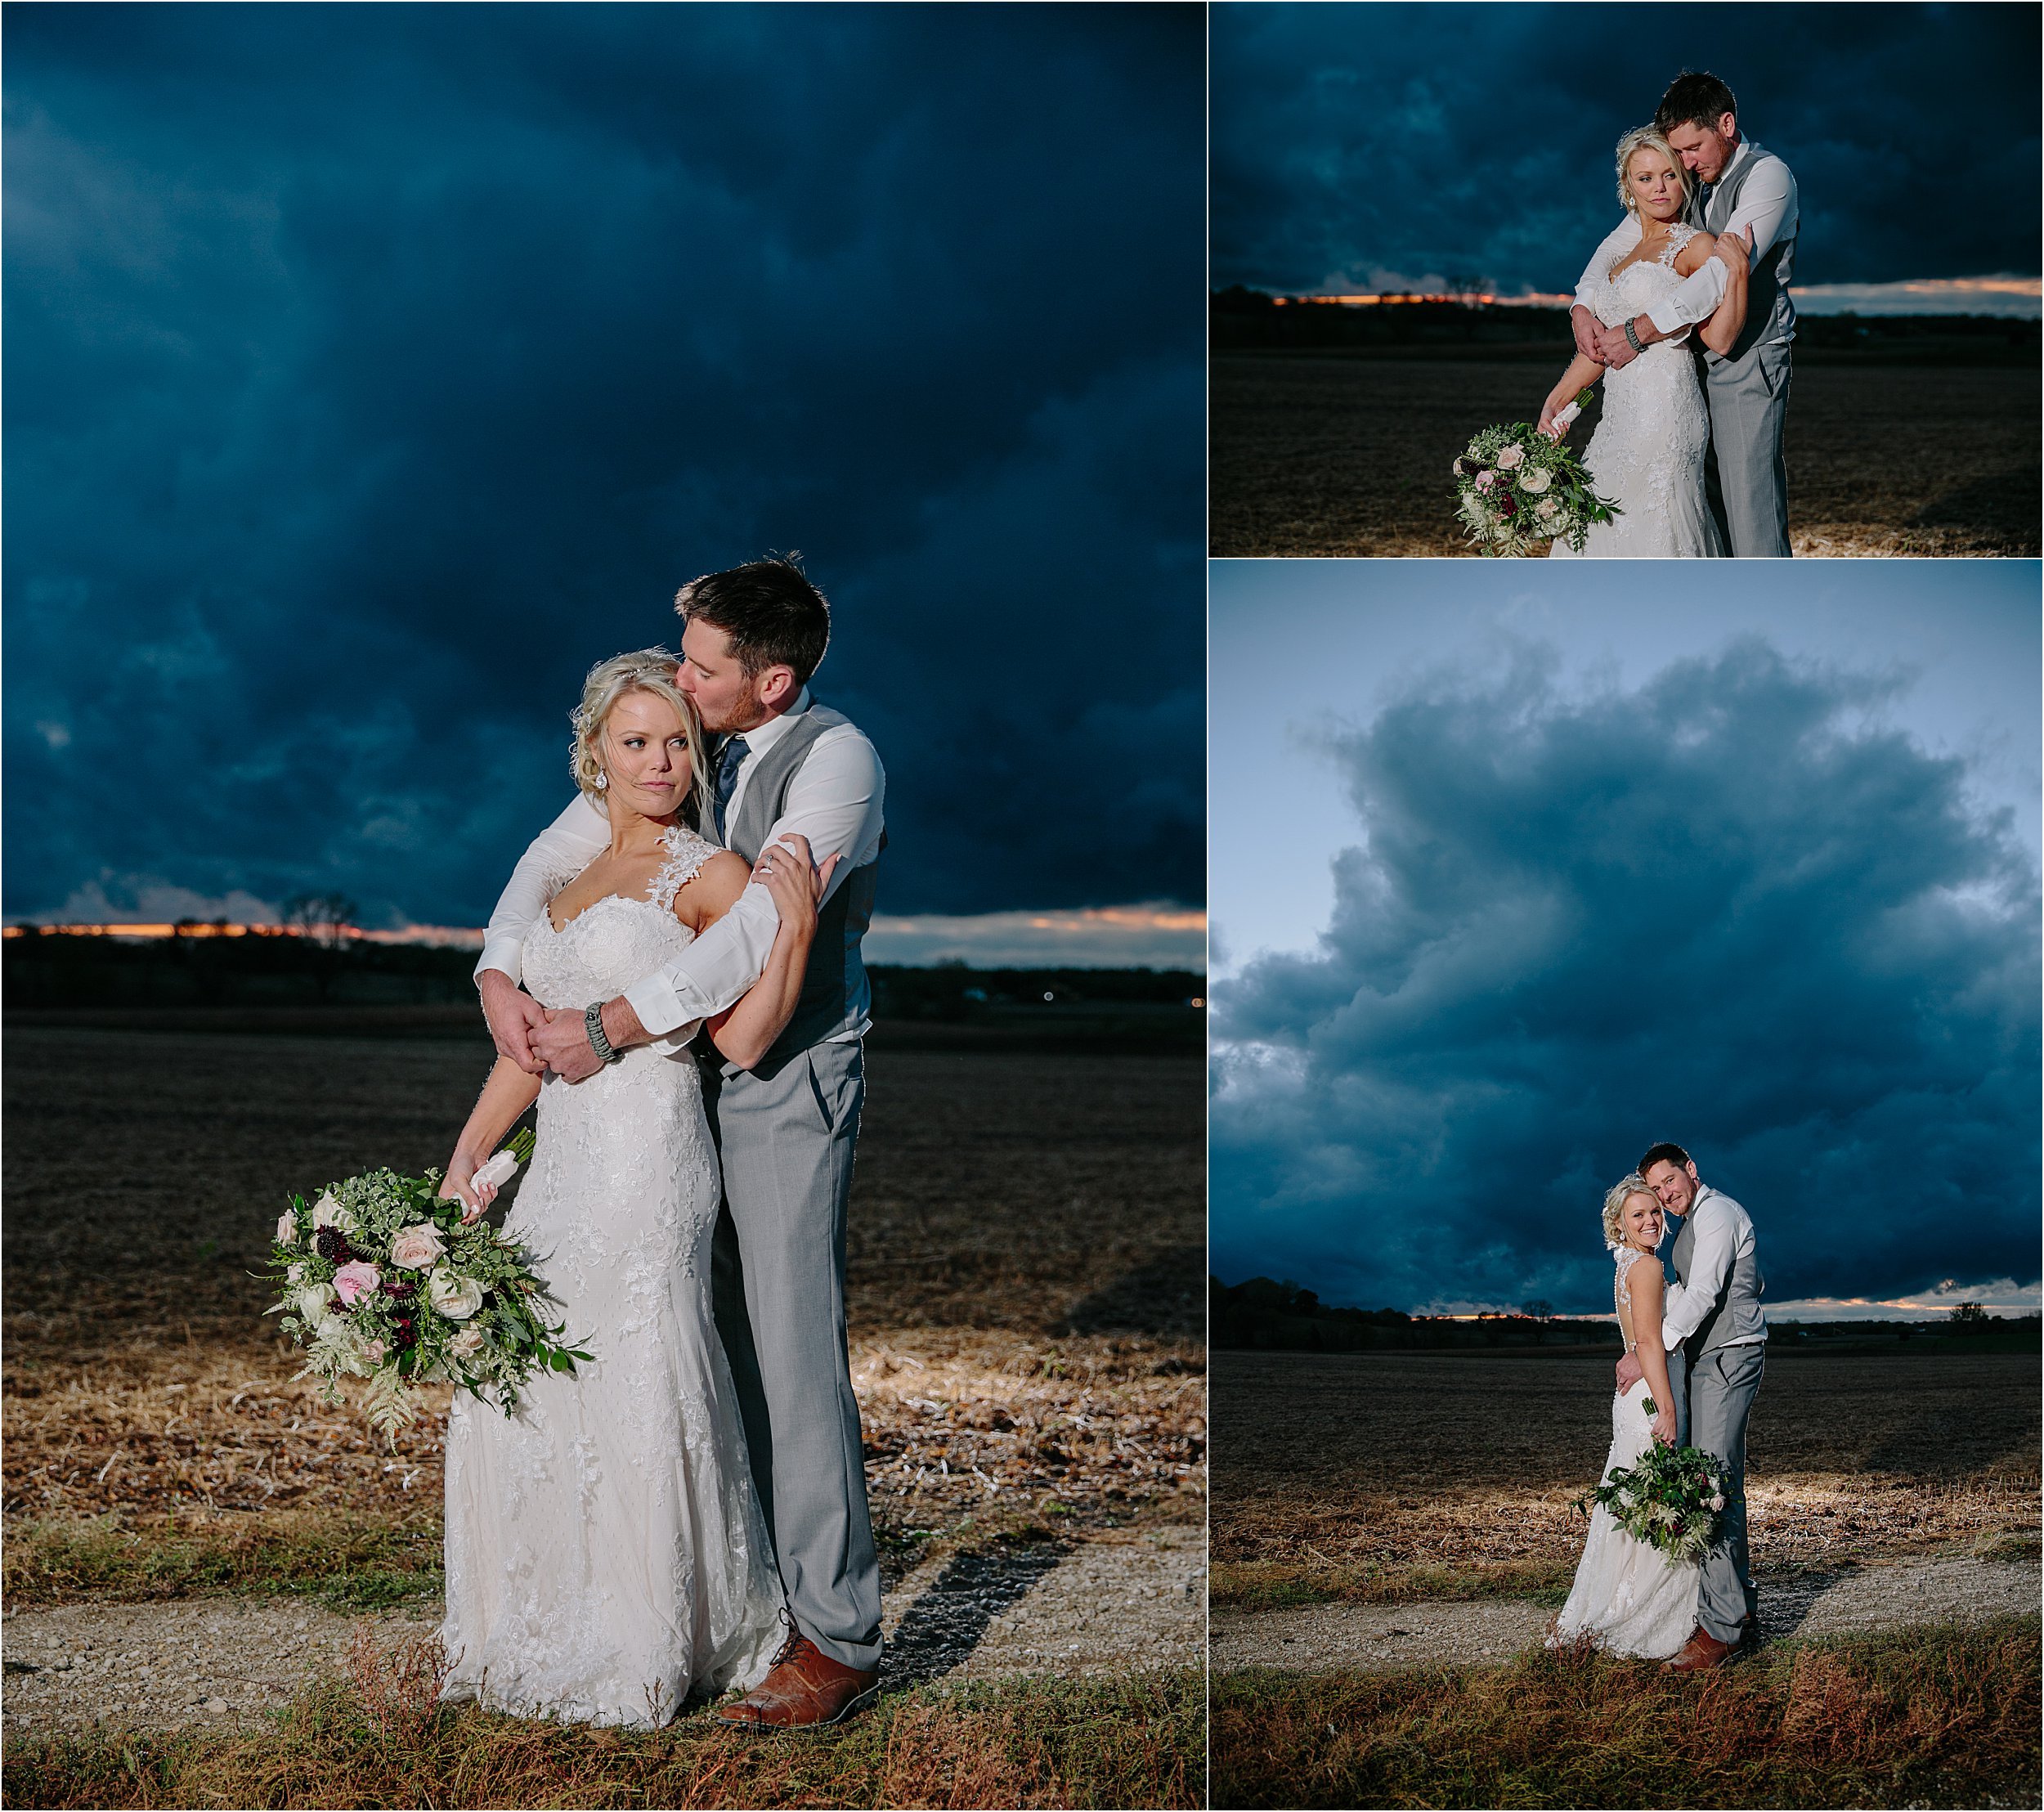 30-bride-groom-blue-sky-sliver-of-sunset-cornfield.JPG